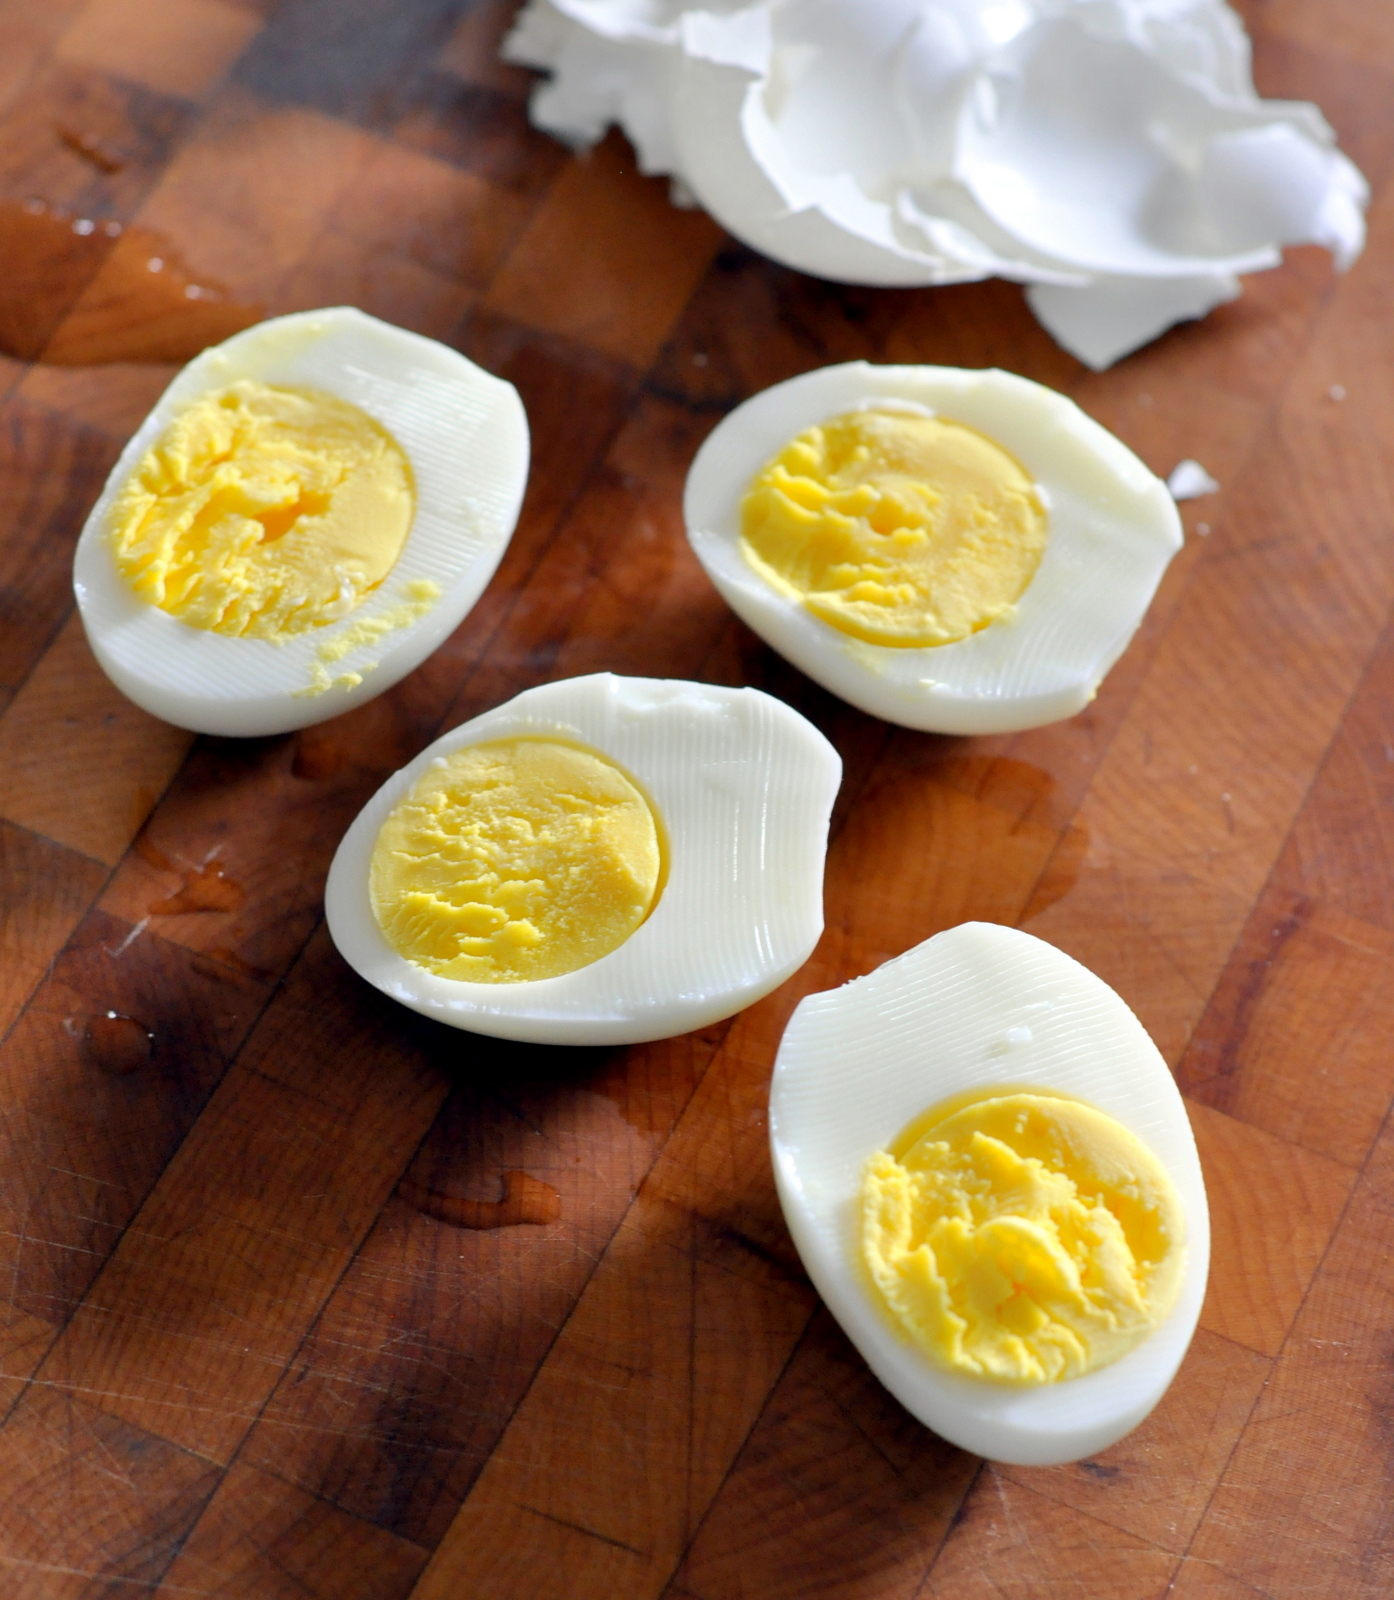 How To: Boil Eggs | Six Secrets on Taste As You Go